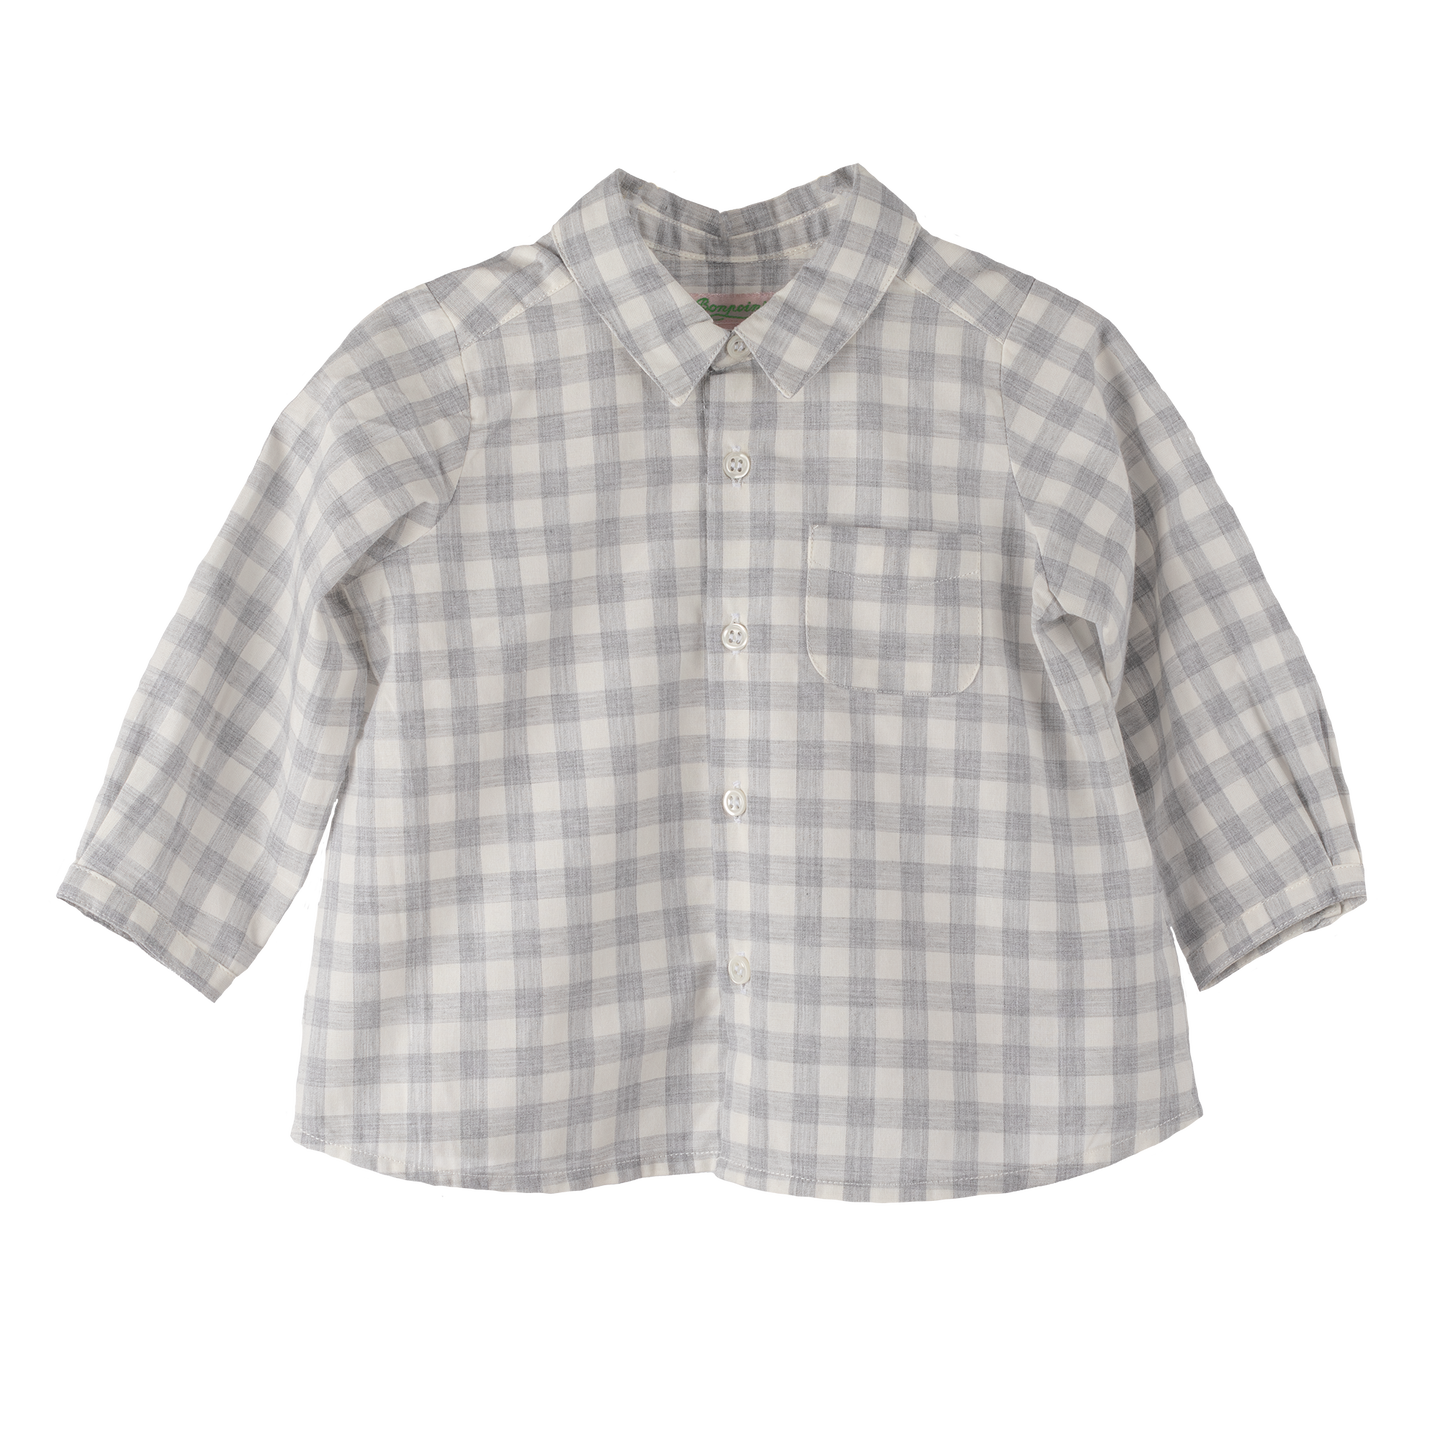 [6m] Bonpoint Boys Grey and White Checkered Shirt